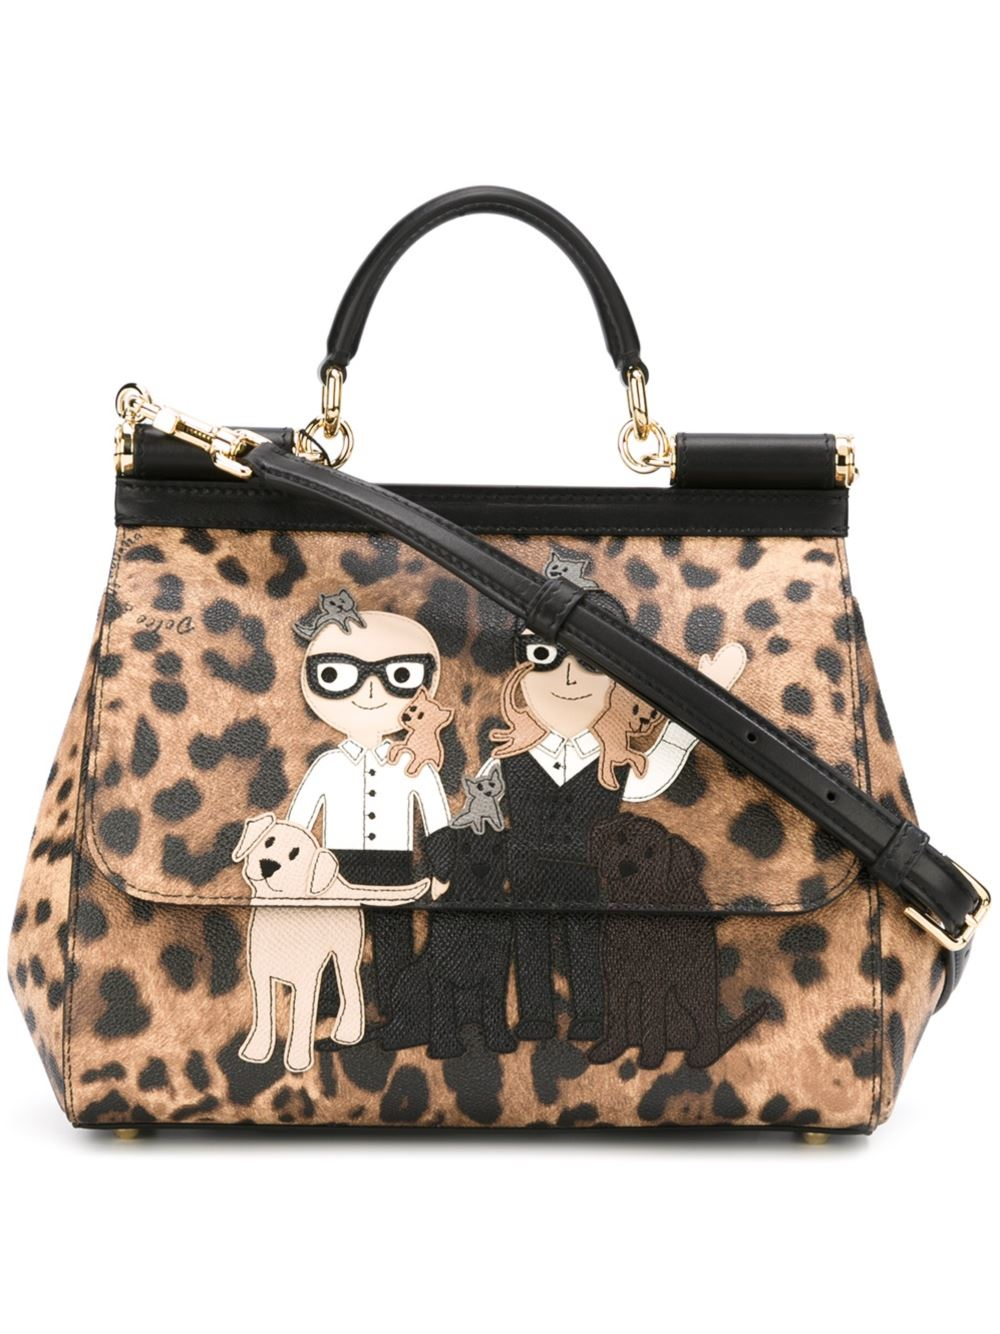 Dolce Gabbana Cat Bag | SEMA Data Co-op